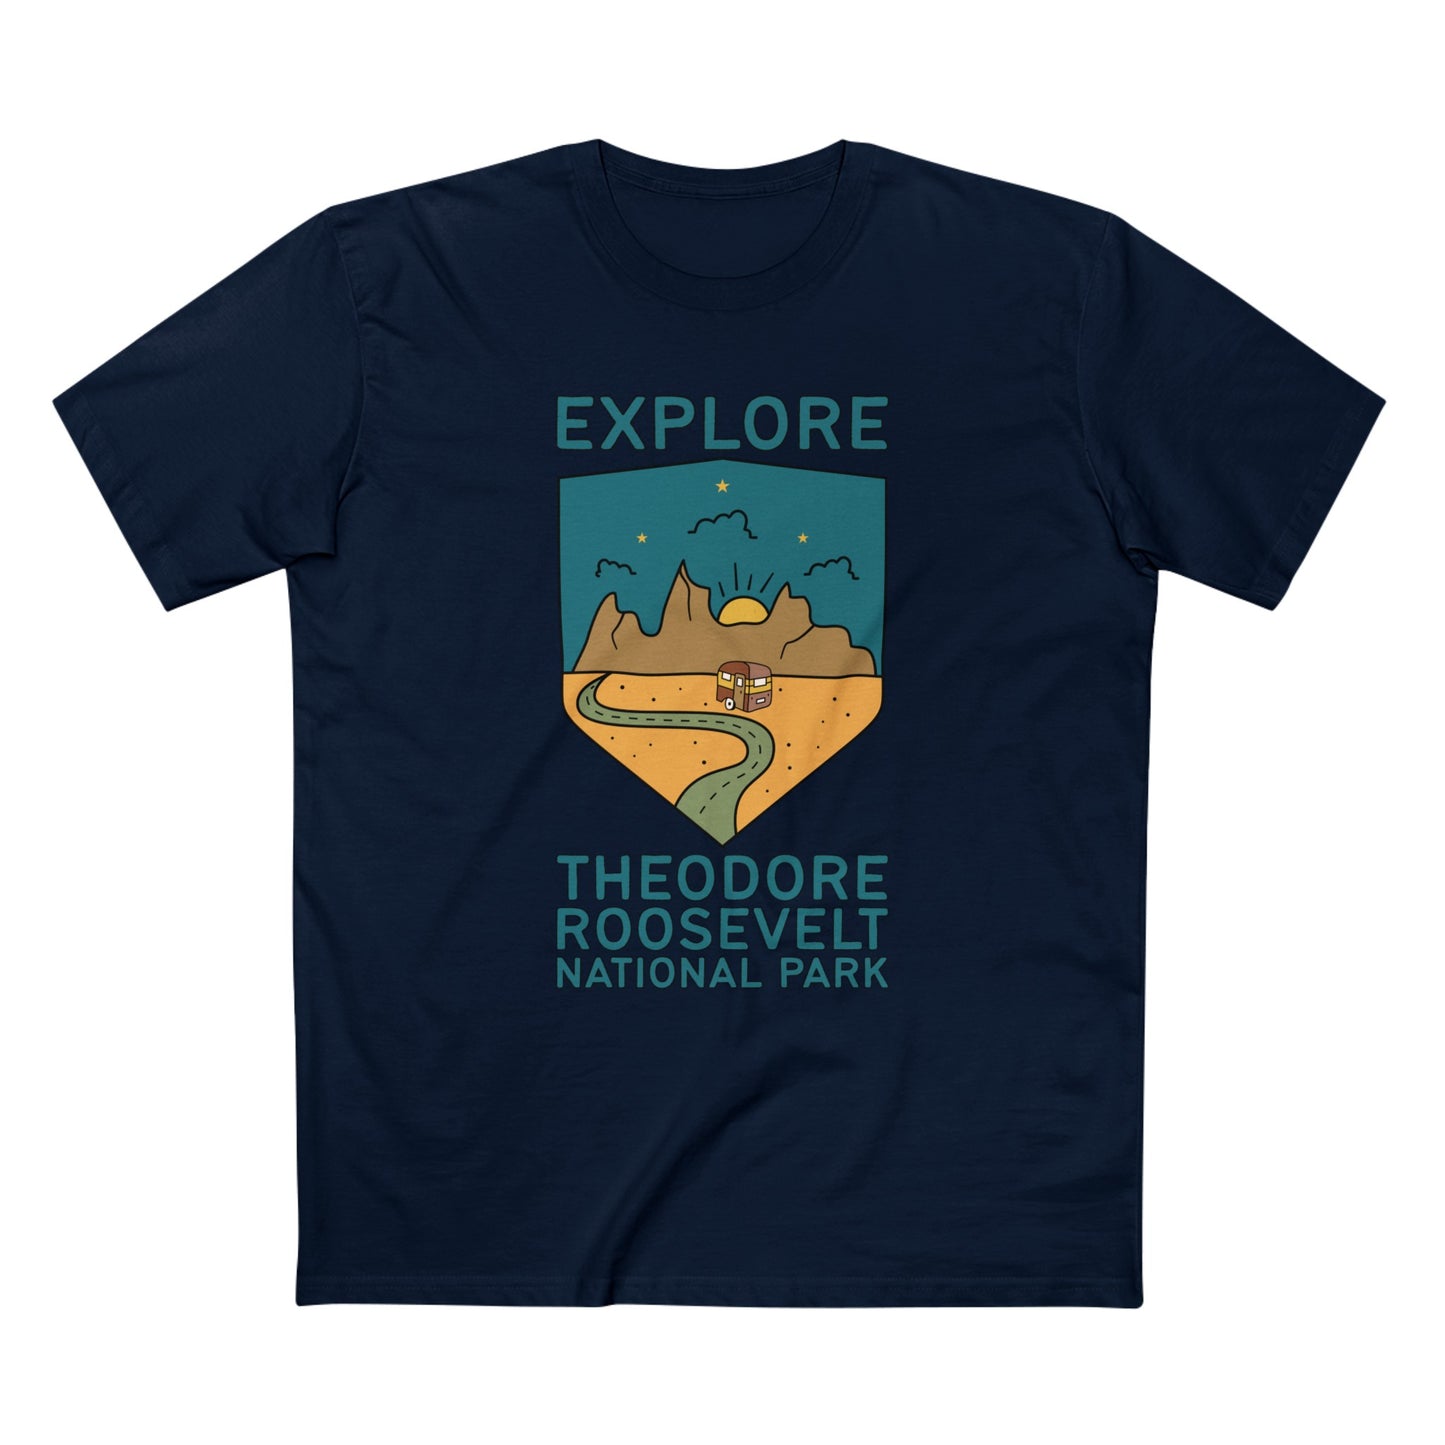 Theodore Roosevelt National Park T-Shirt - Explore Theodore Roosevelt